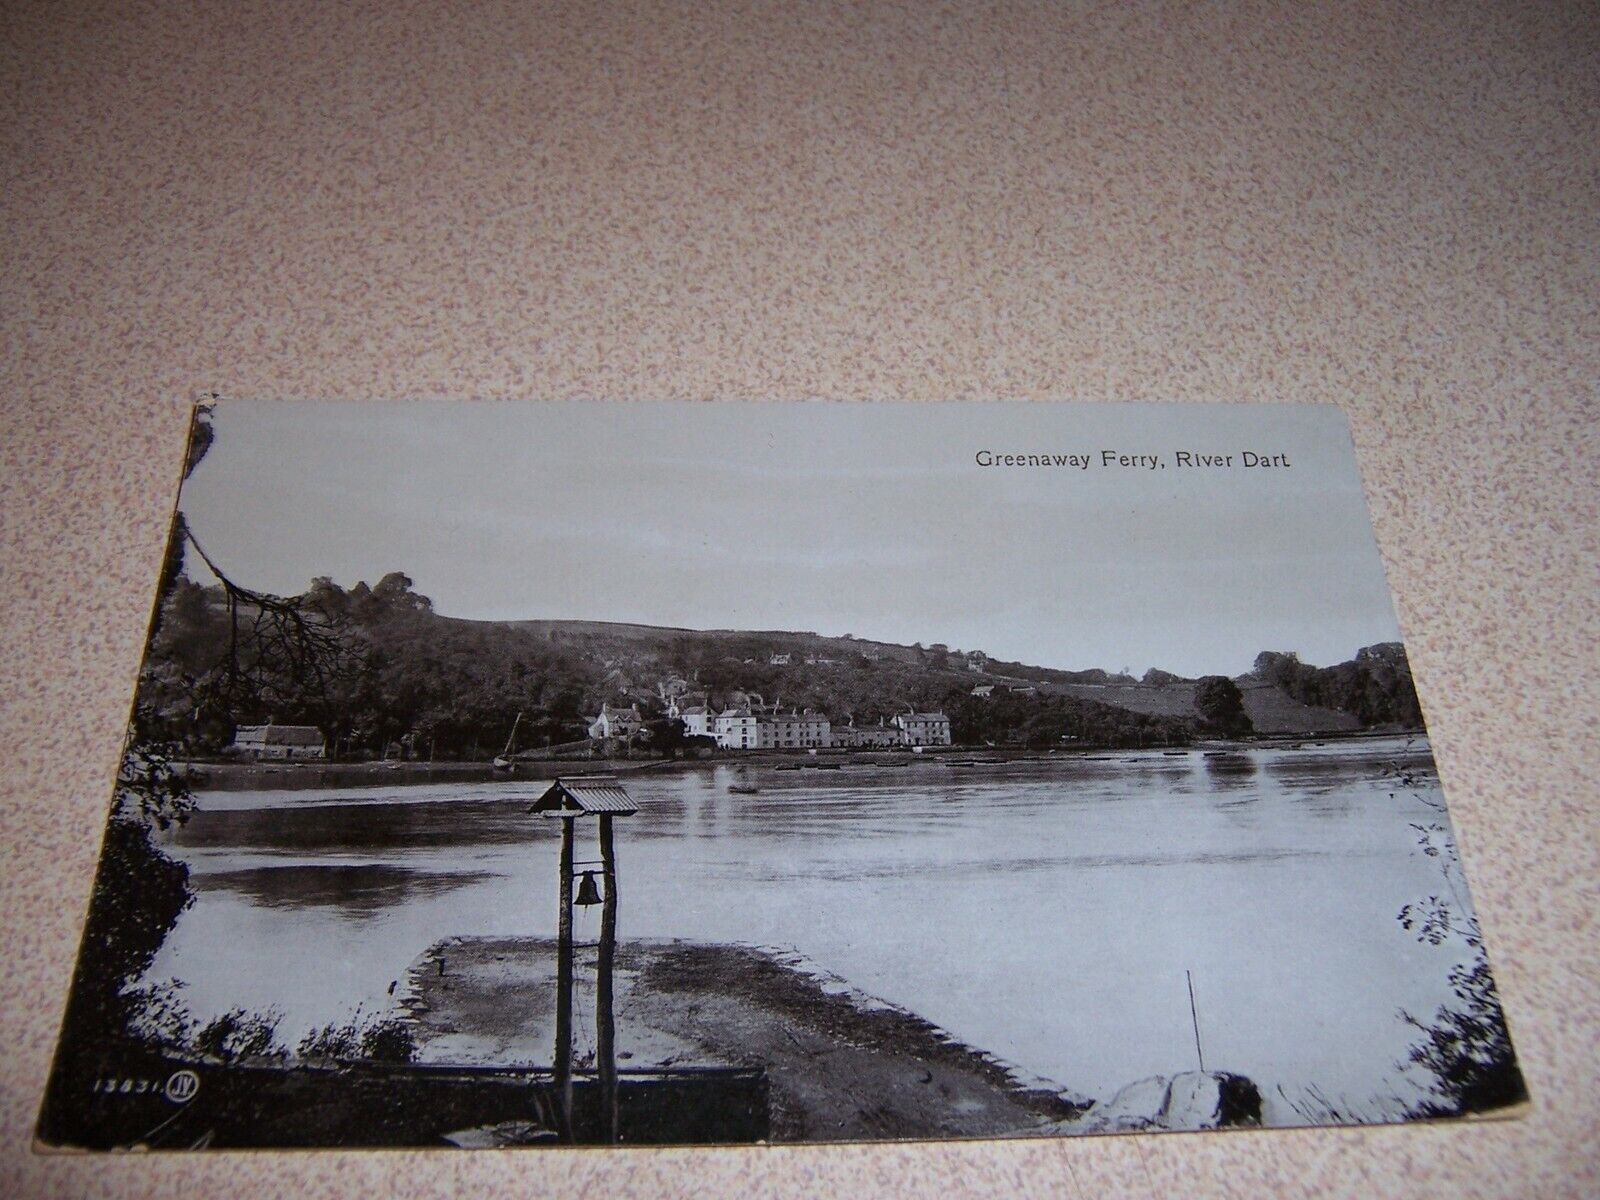 1910s GREENWAY FERRY, RIVER DART, DARTMOUTH UK. ANTIQUE POSTCARD